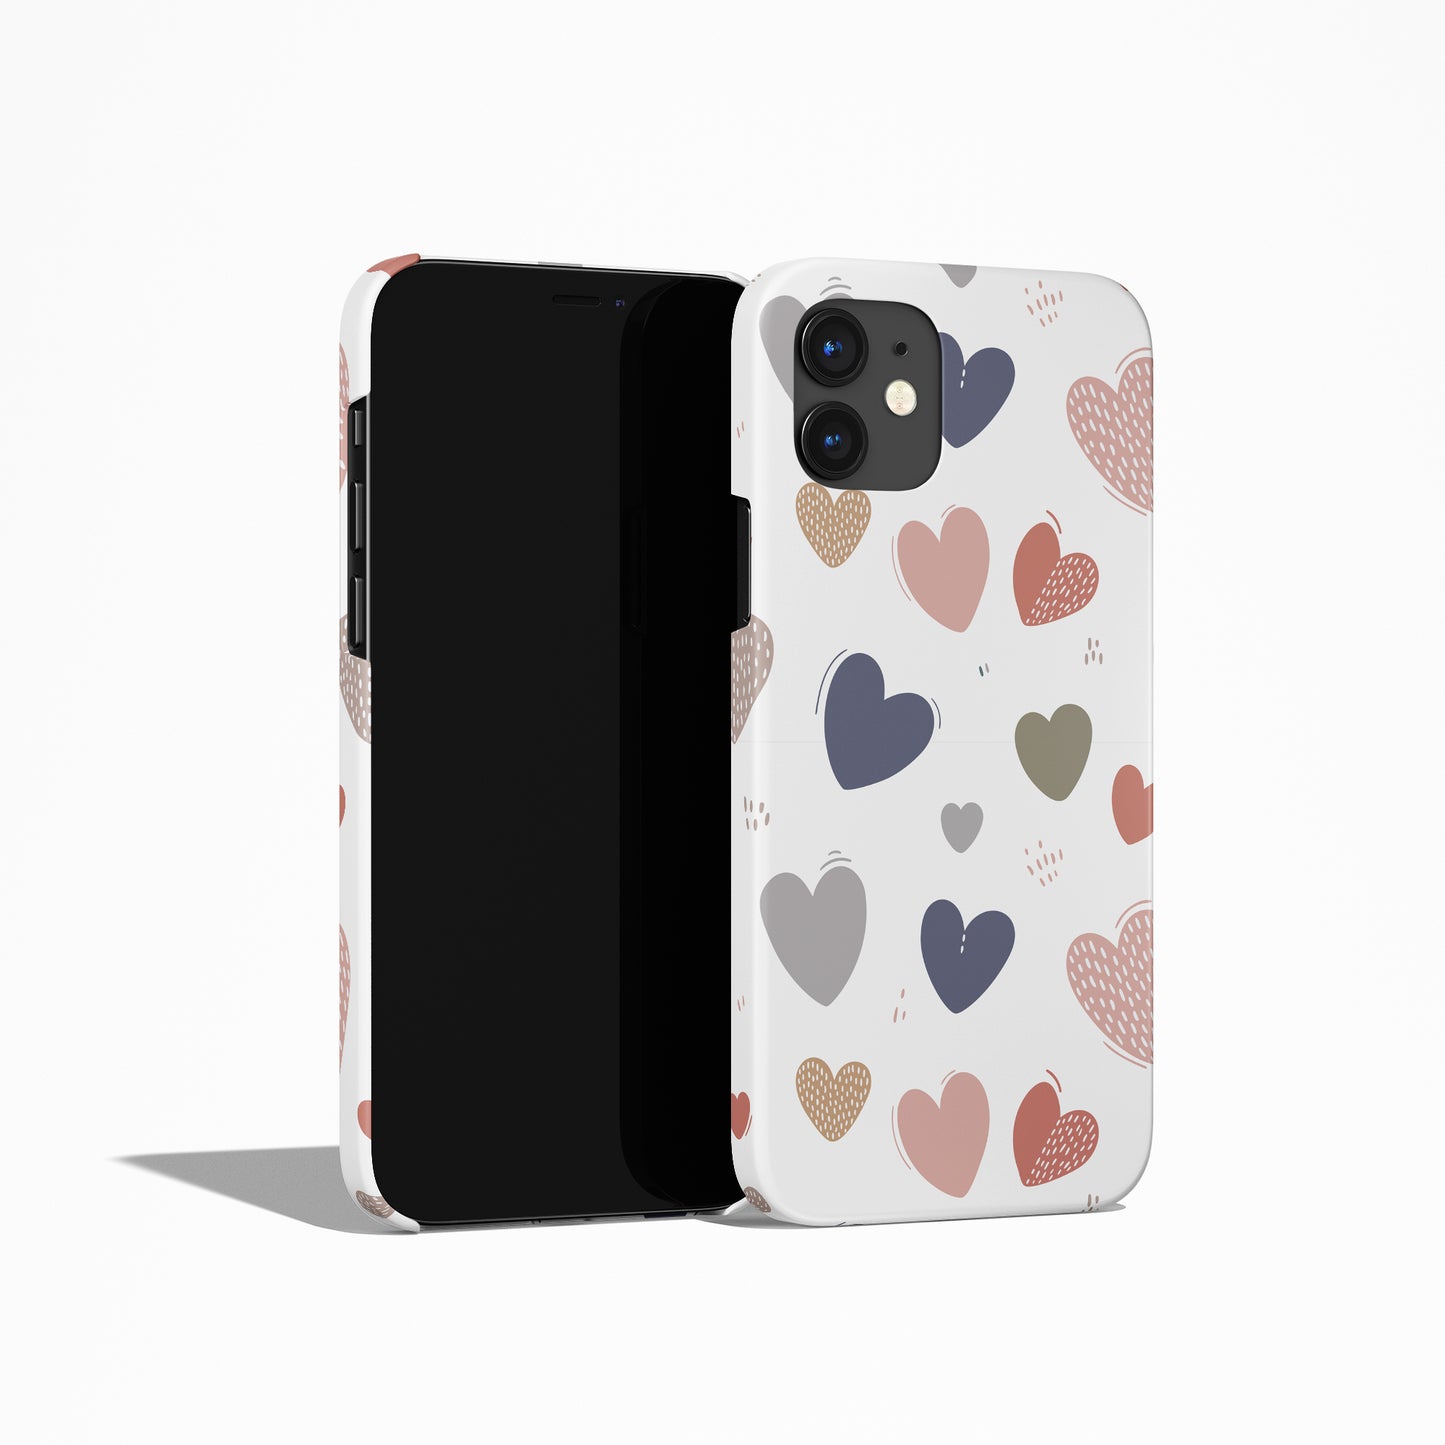 Boho Chic Hearts iPhone Case